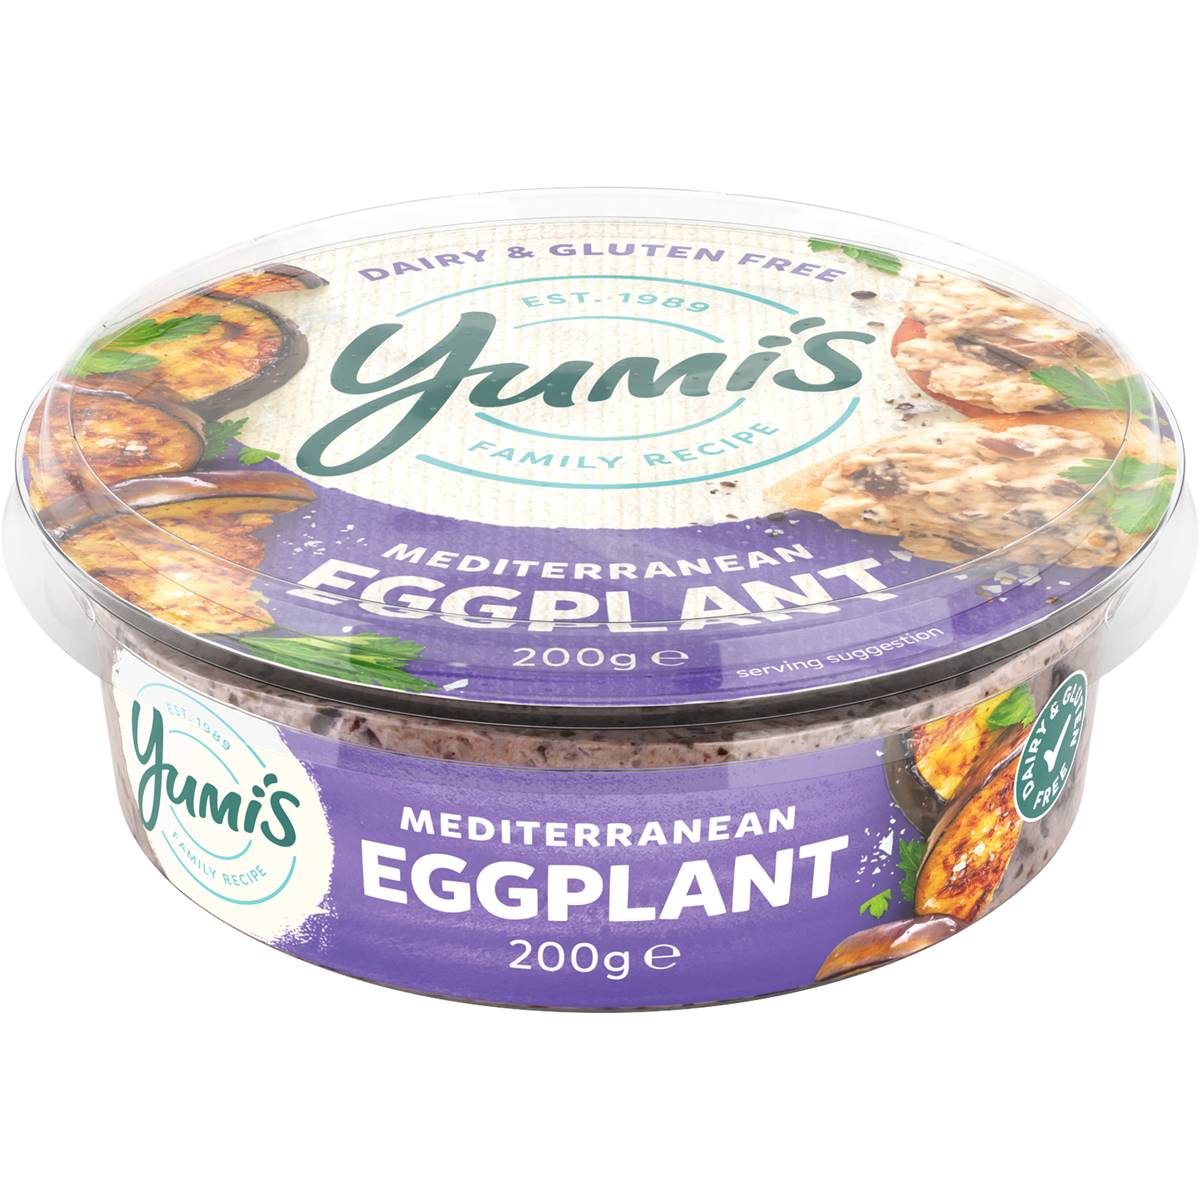 Calories in Yumi's Eggplant Mediterranean Dip